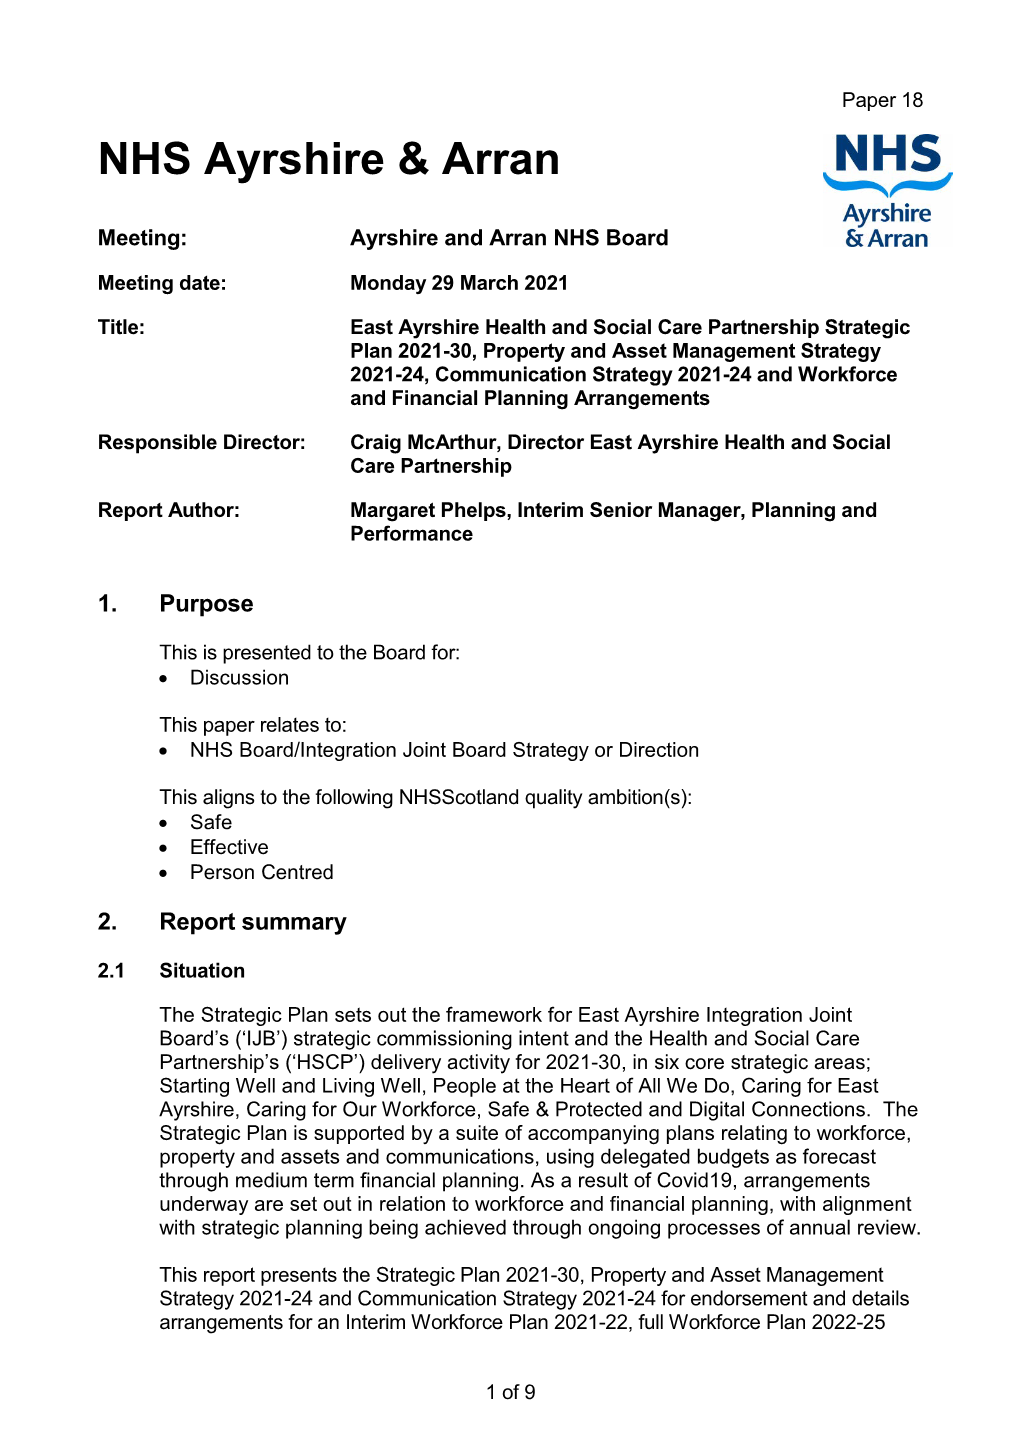 Paper 18: East Ayrshire Strategic Plan